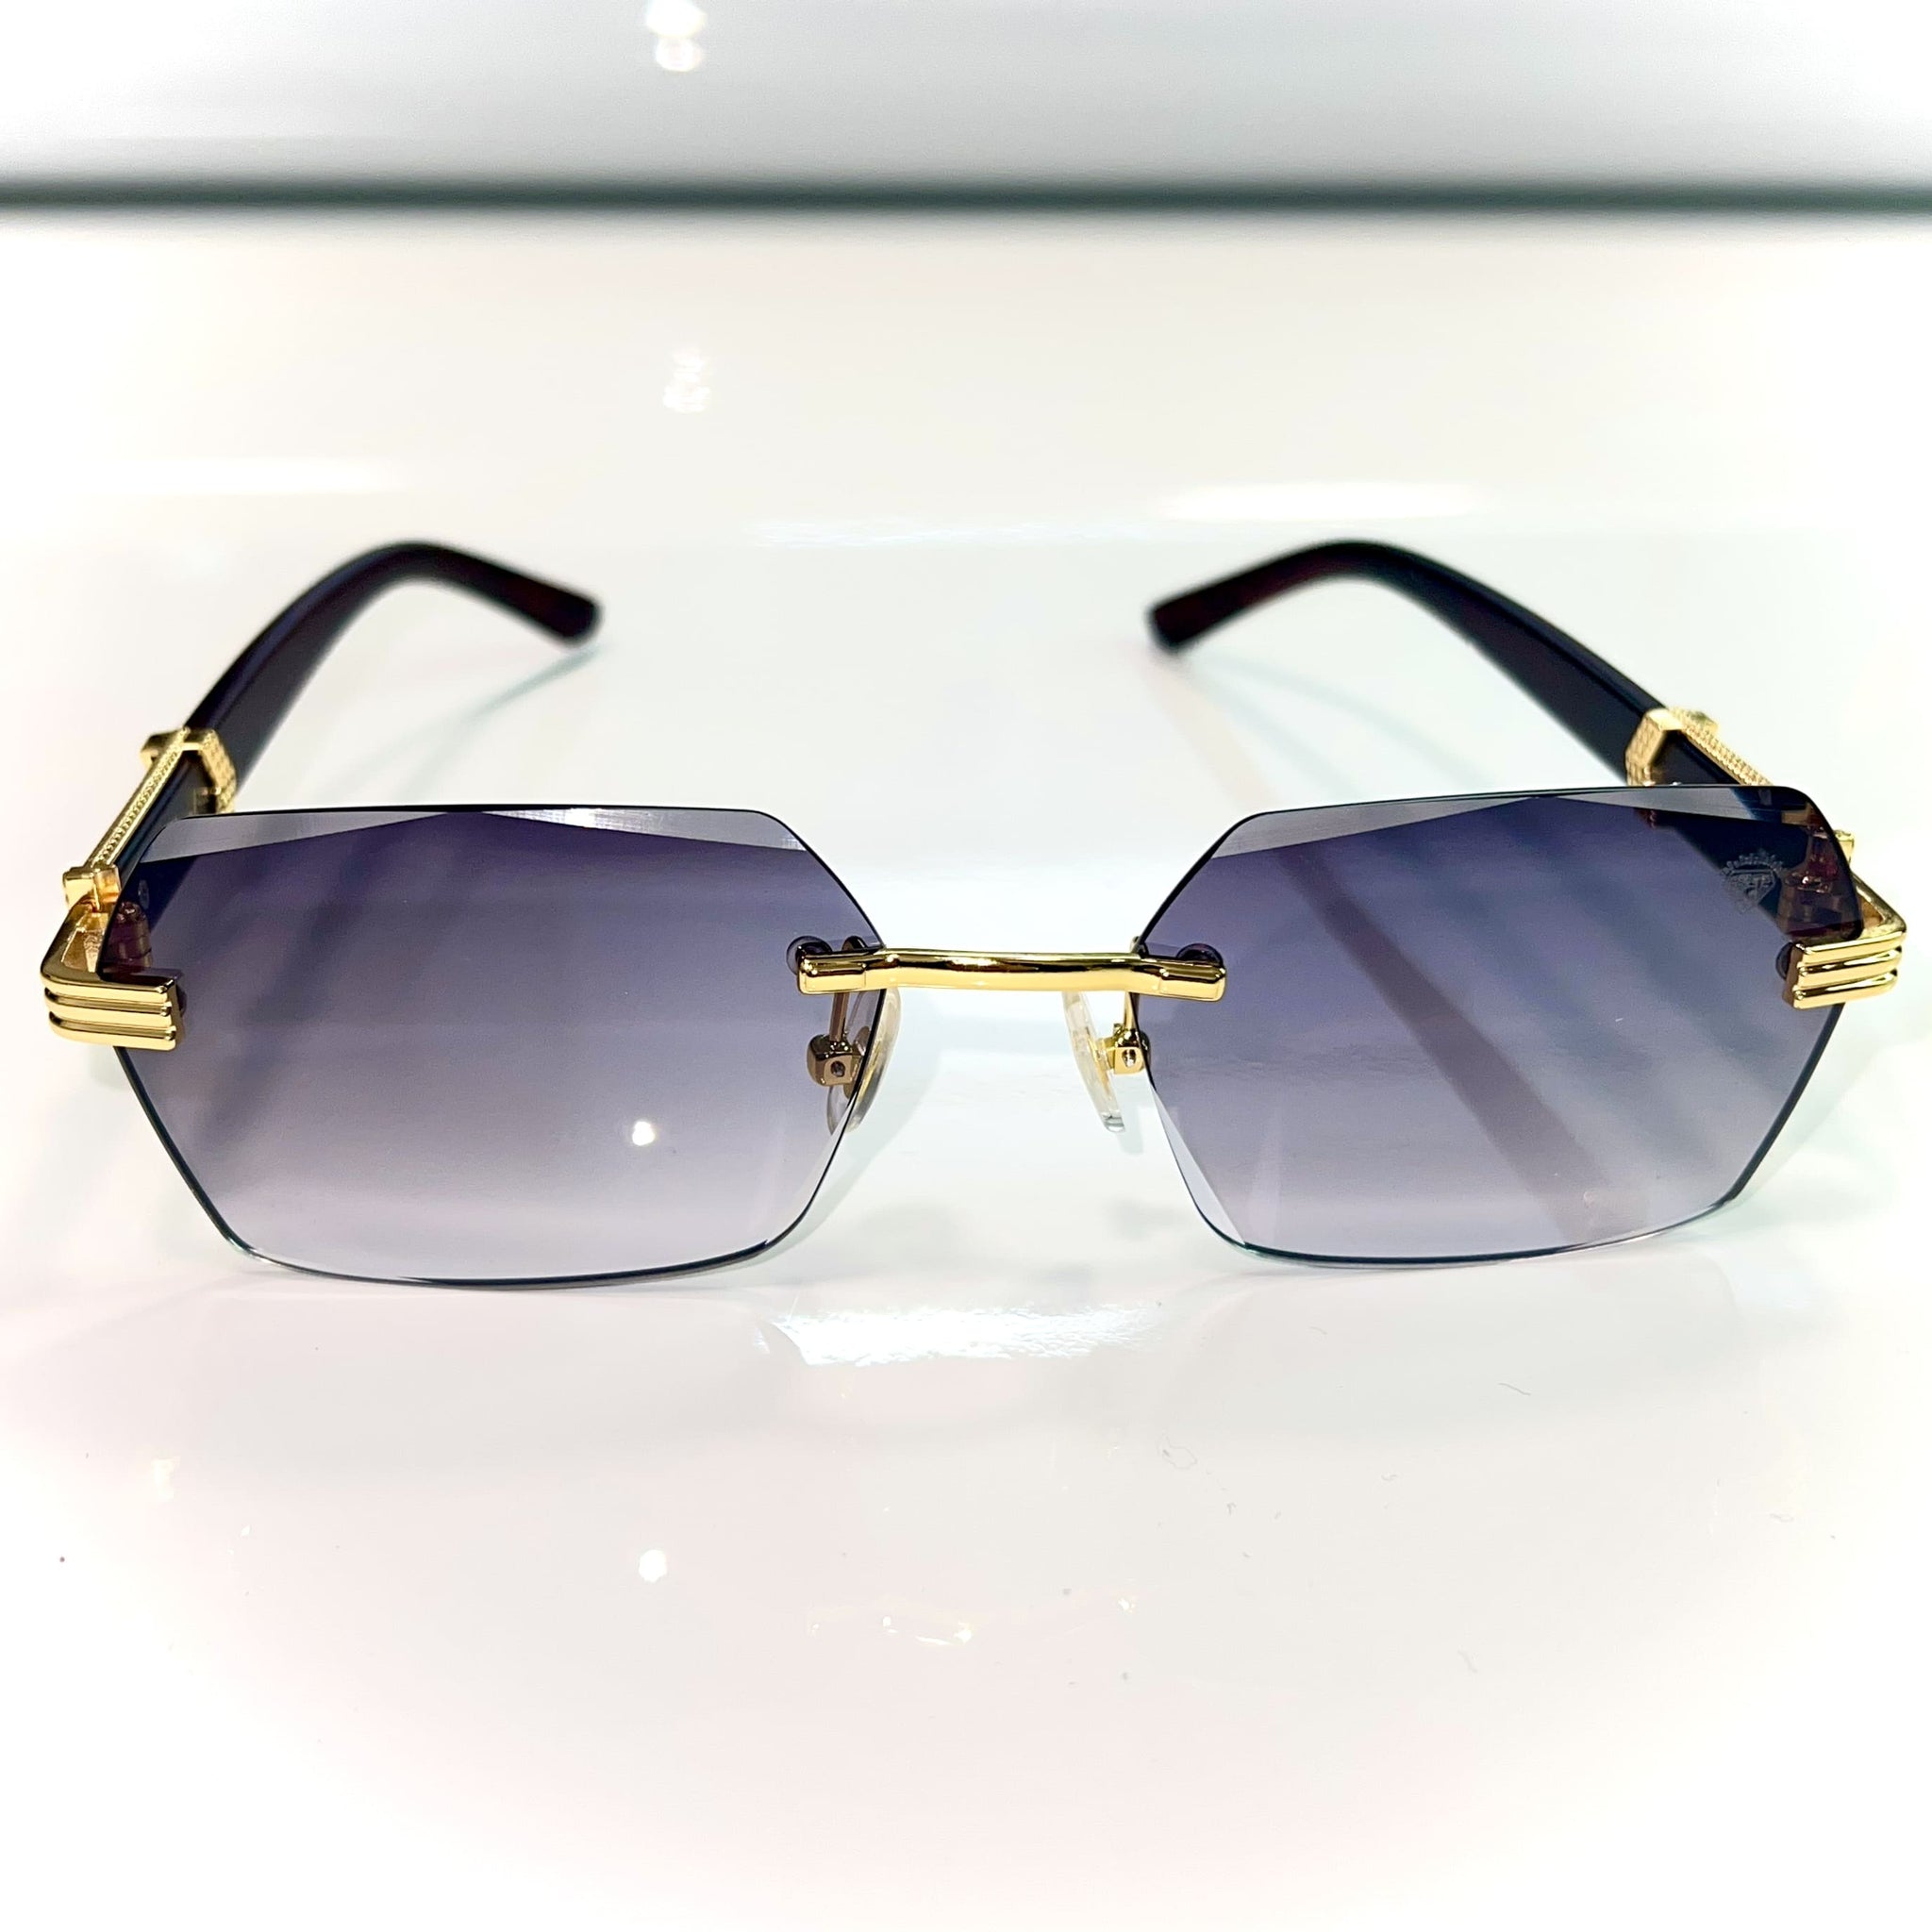 Sehgal Woodcut glasses - 14k gold plated - Grey shade - Gold / Woodgrain frame